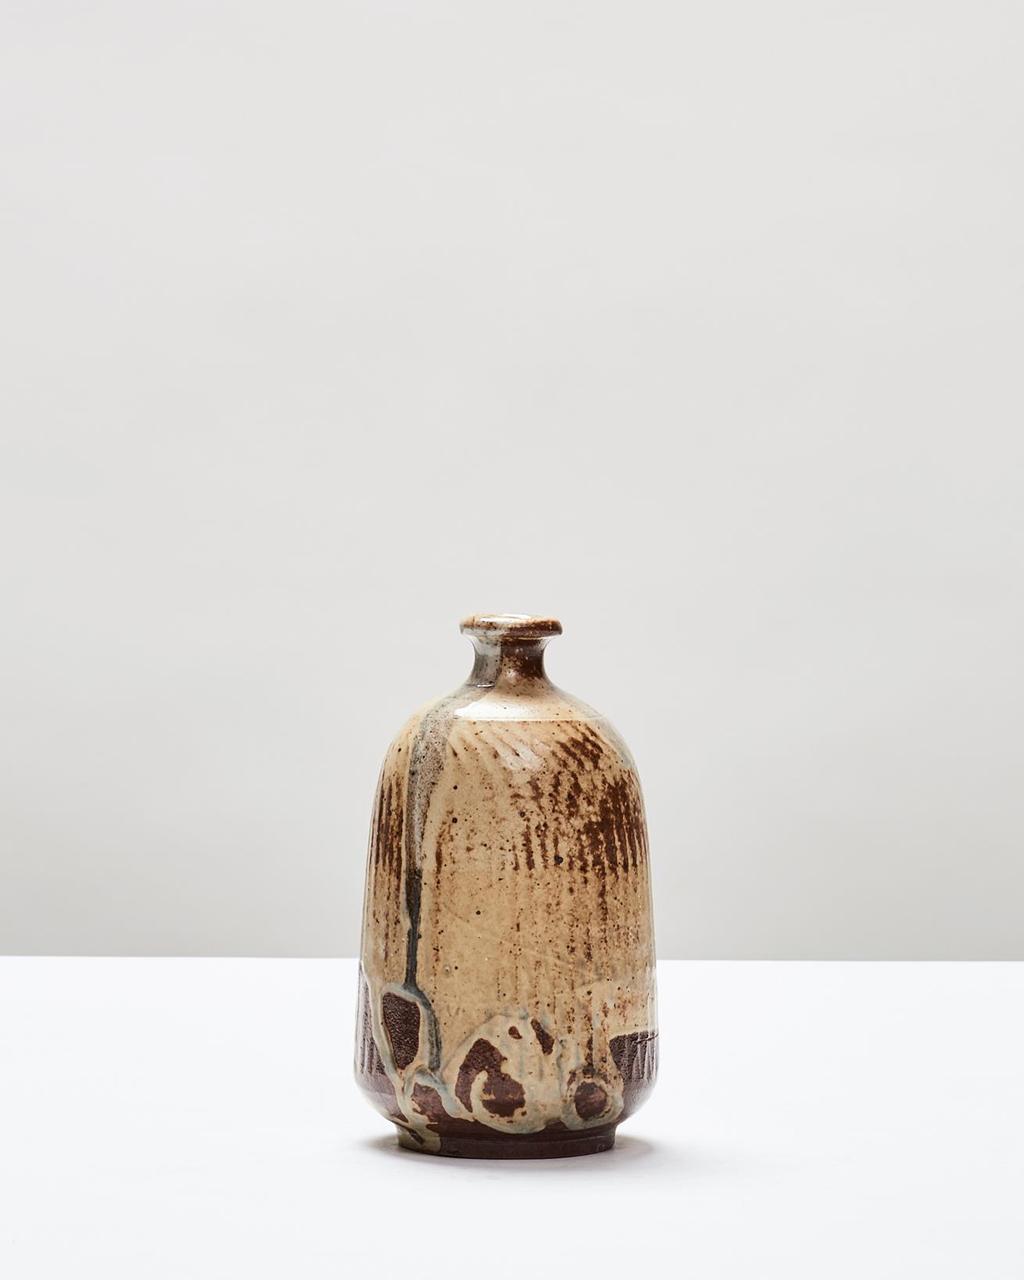 Jean Carriès, Sandstone Vase, c.1900, Stoneware, 6h x 3.25w x 3.